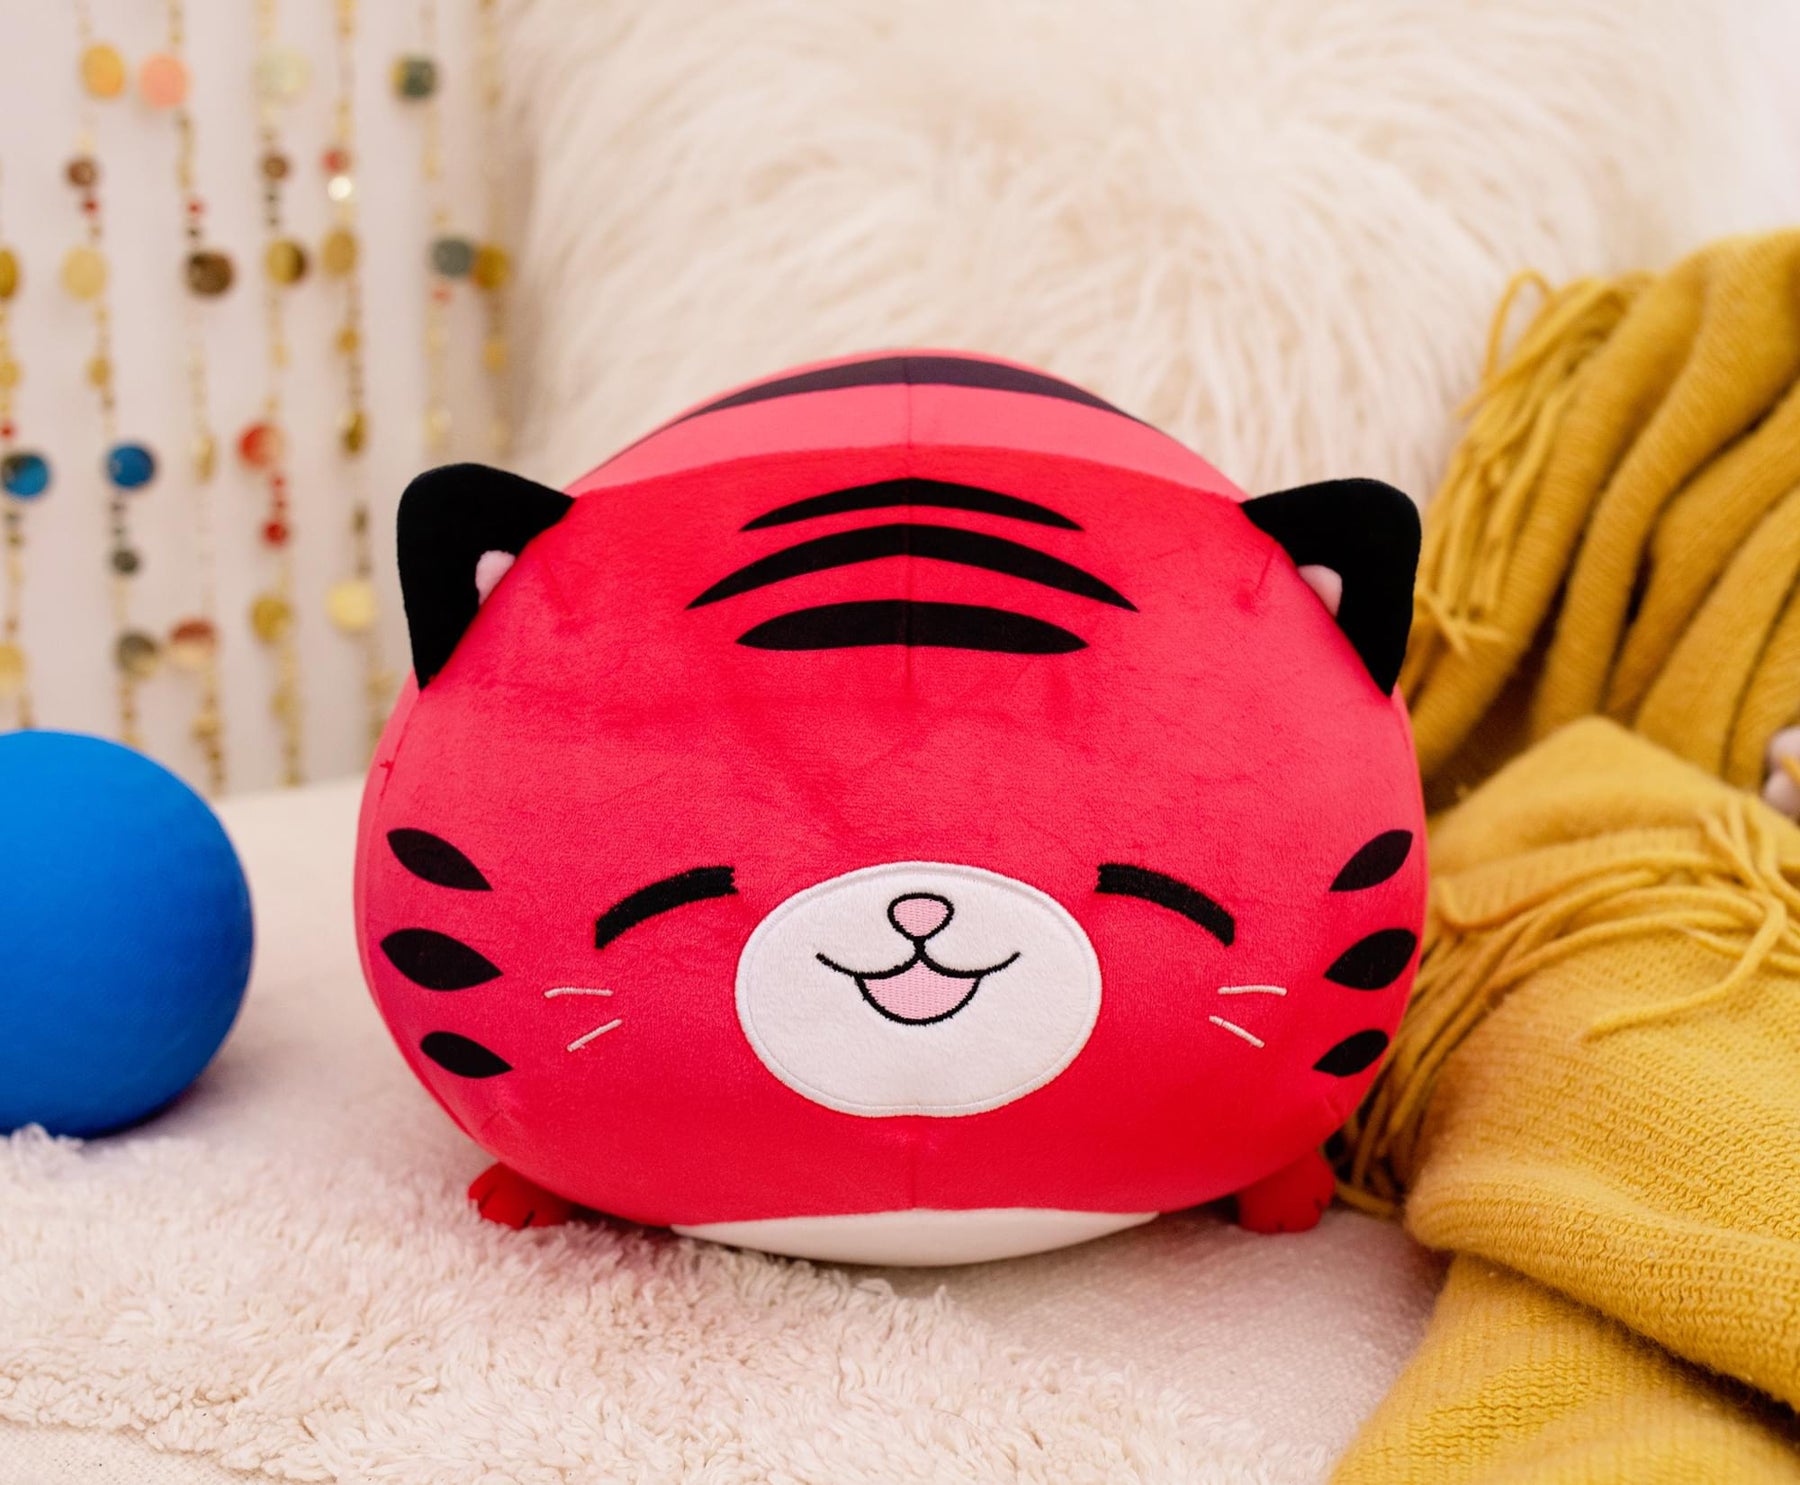 MochiOshis 12-Inch Character Plush Toy Animal Red Tiger | Puyumi Purroshi